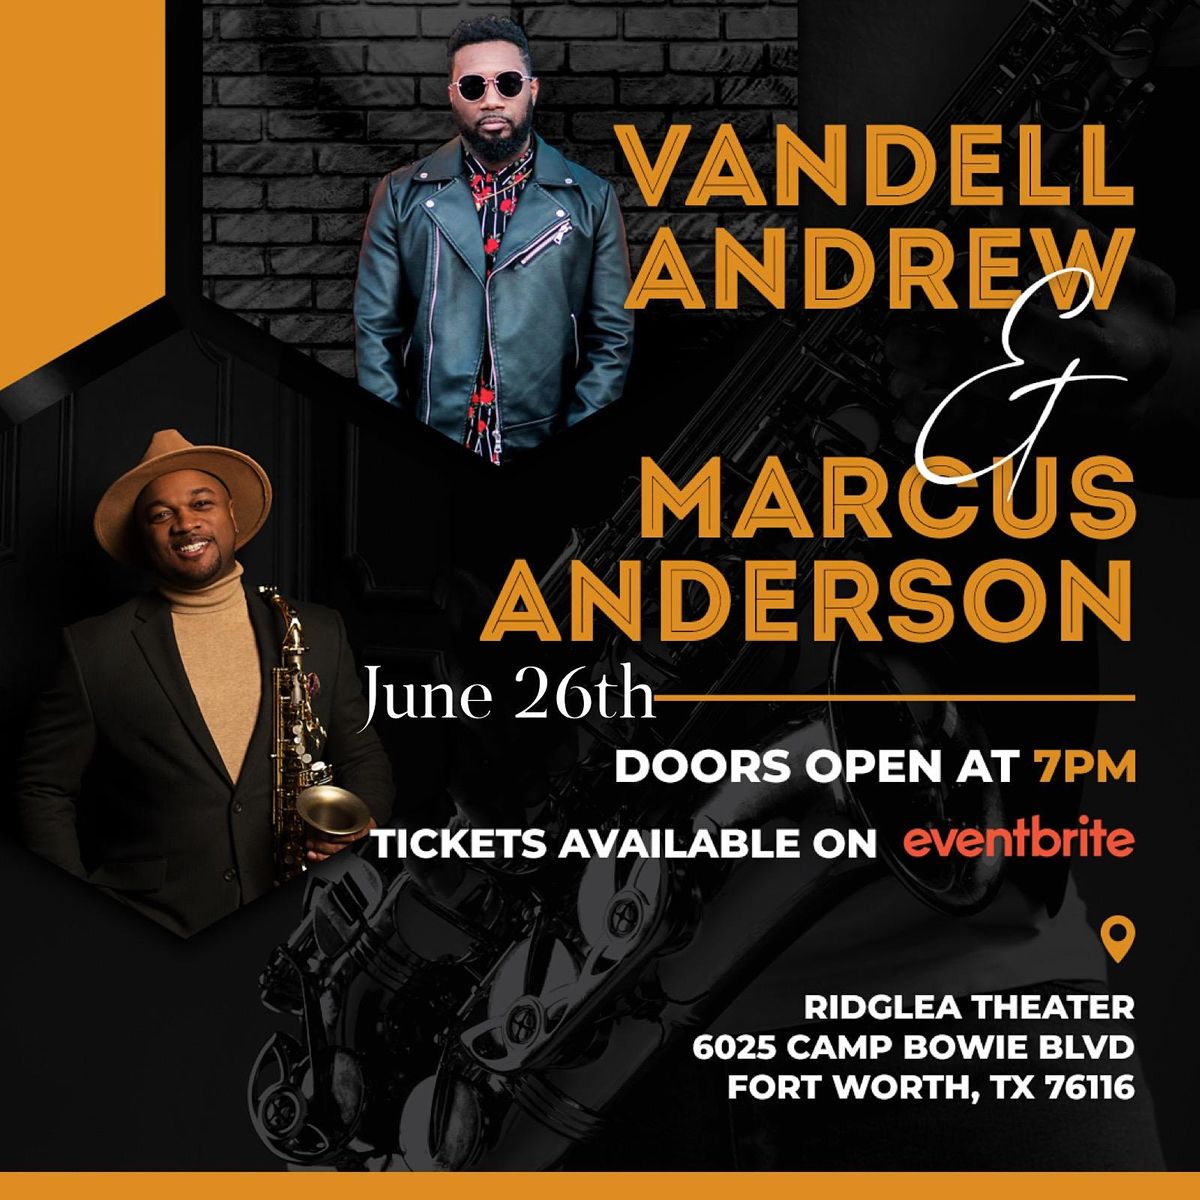 Vandell Andrew & Marcus Anderson LIVE!